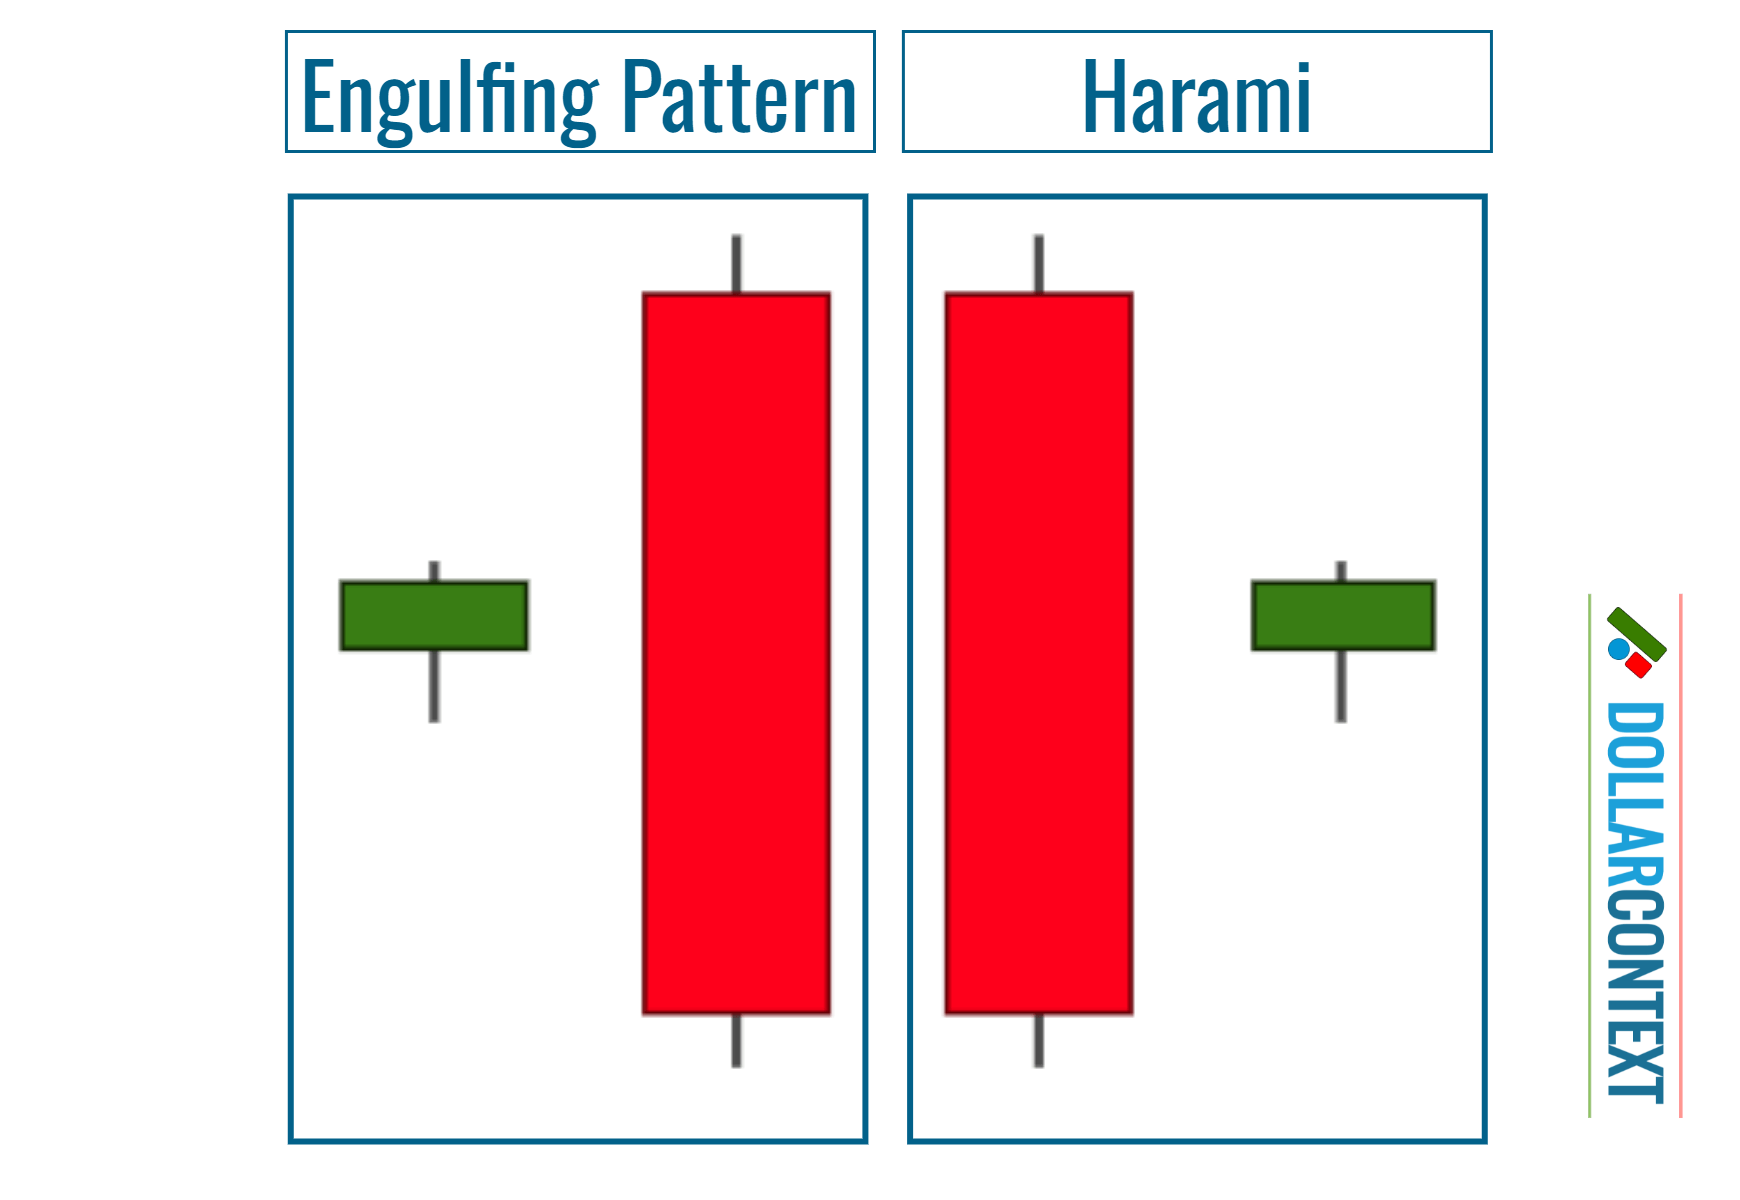 Engulfing Pattern vs. Harami